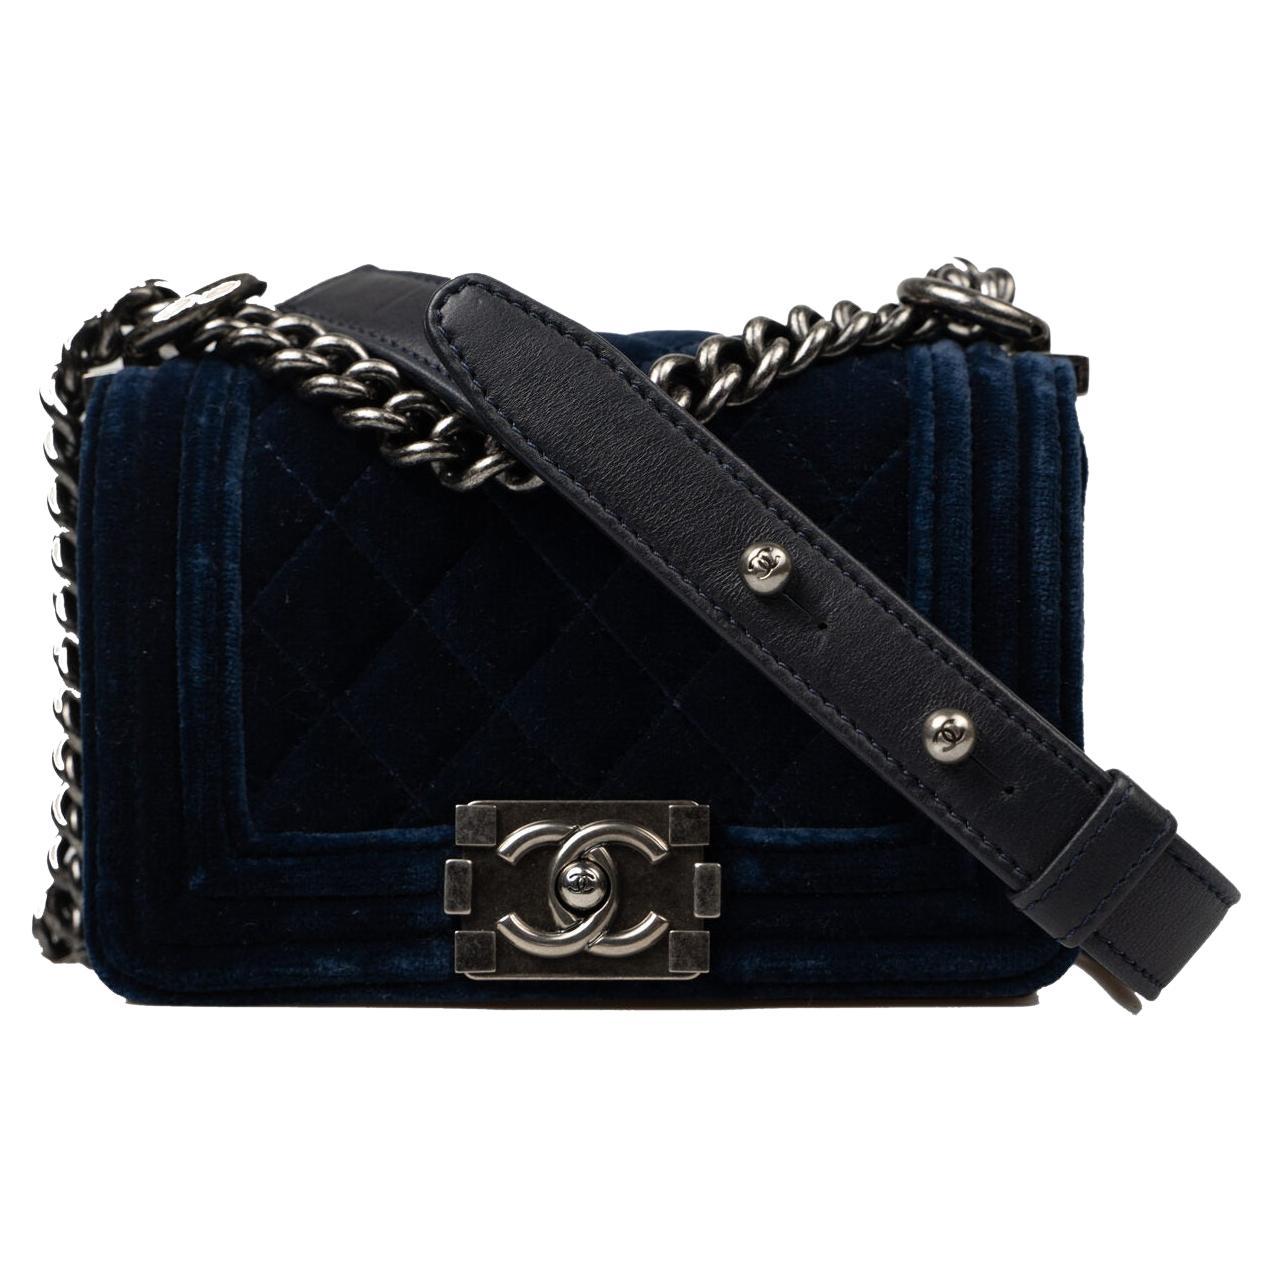 Boy Chanel Handbag